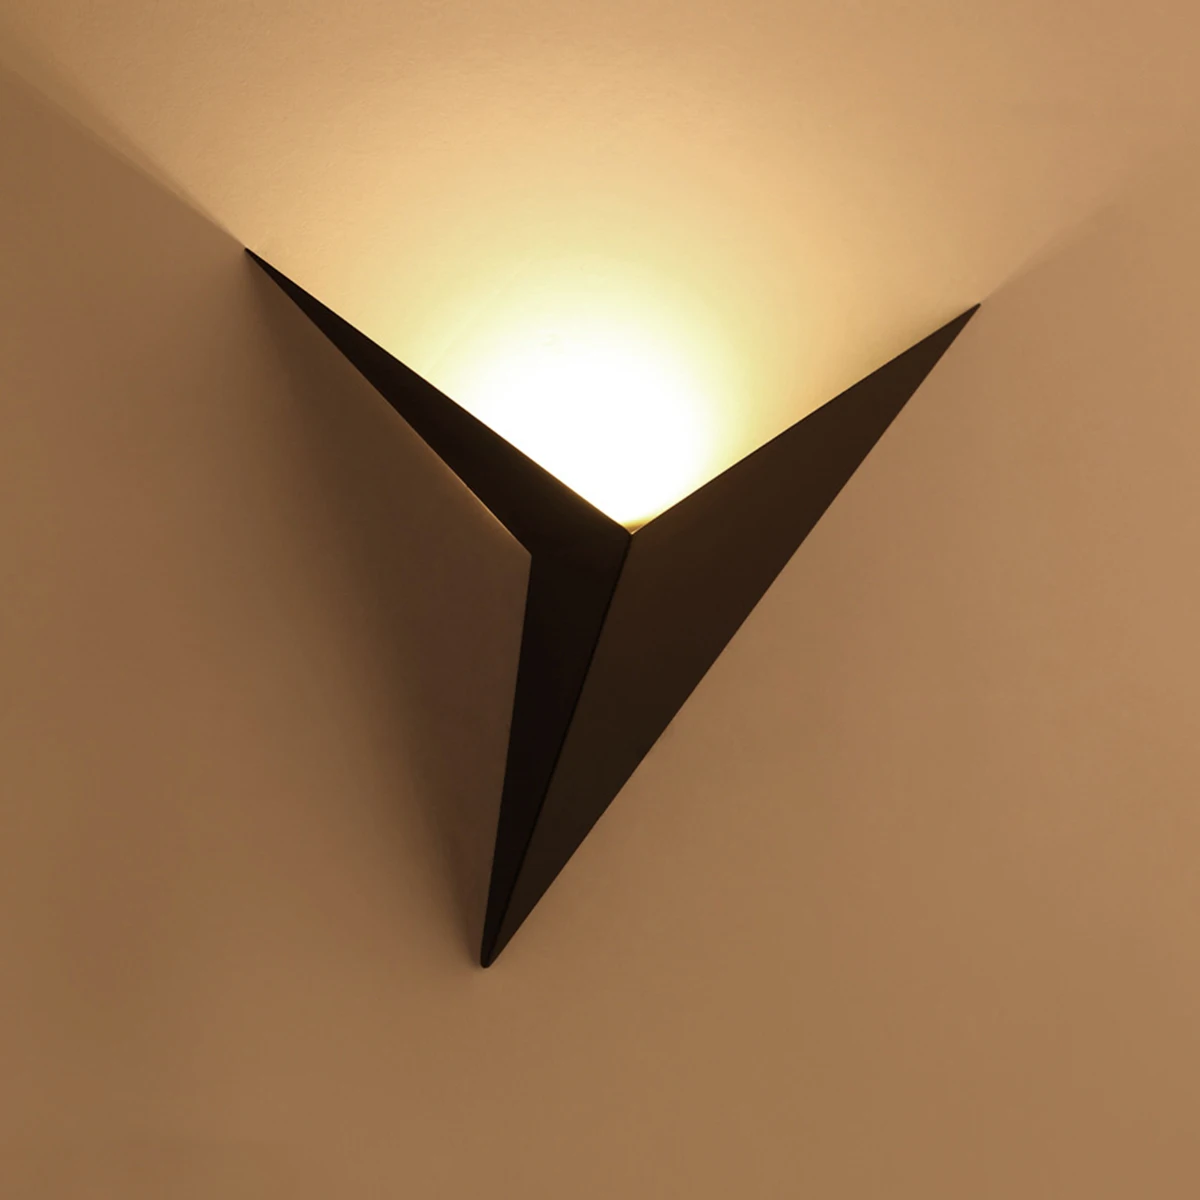 

Minimalist Triangular Wall Lamp Nordic style Indoor Wall Lamp Living Room Lights Simple decoration light 3W AC85-265V Home Decor